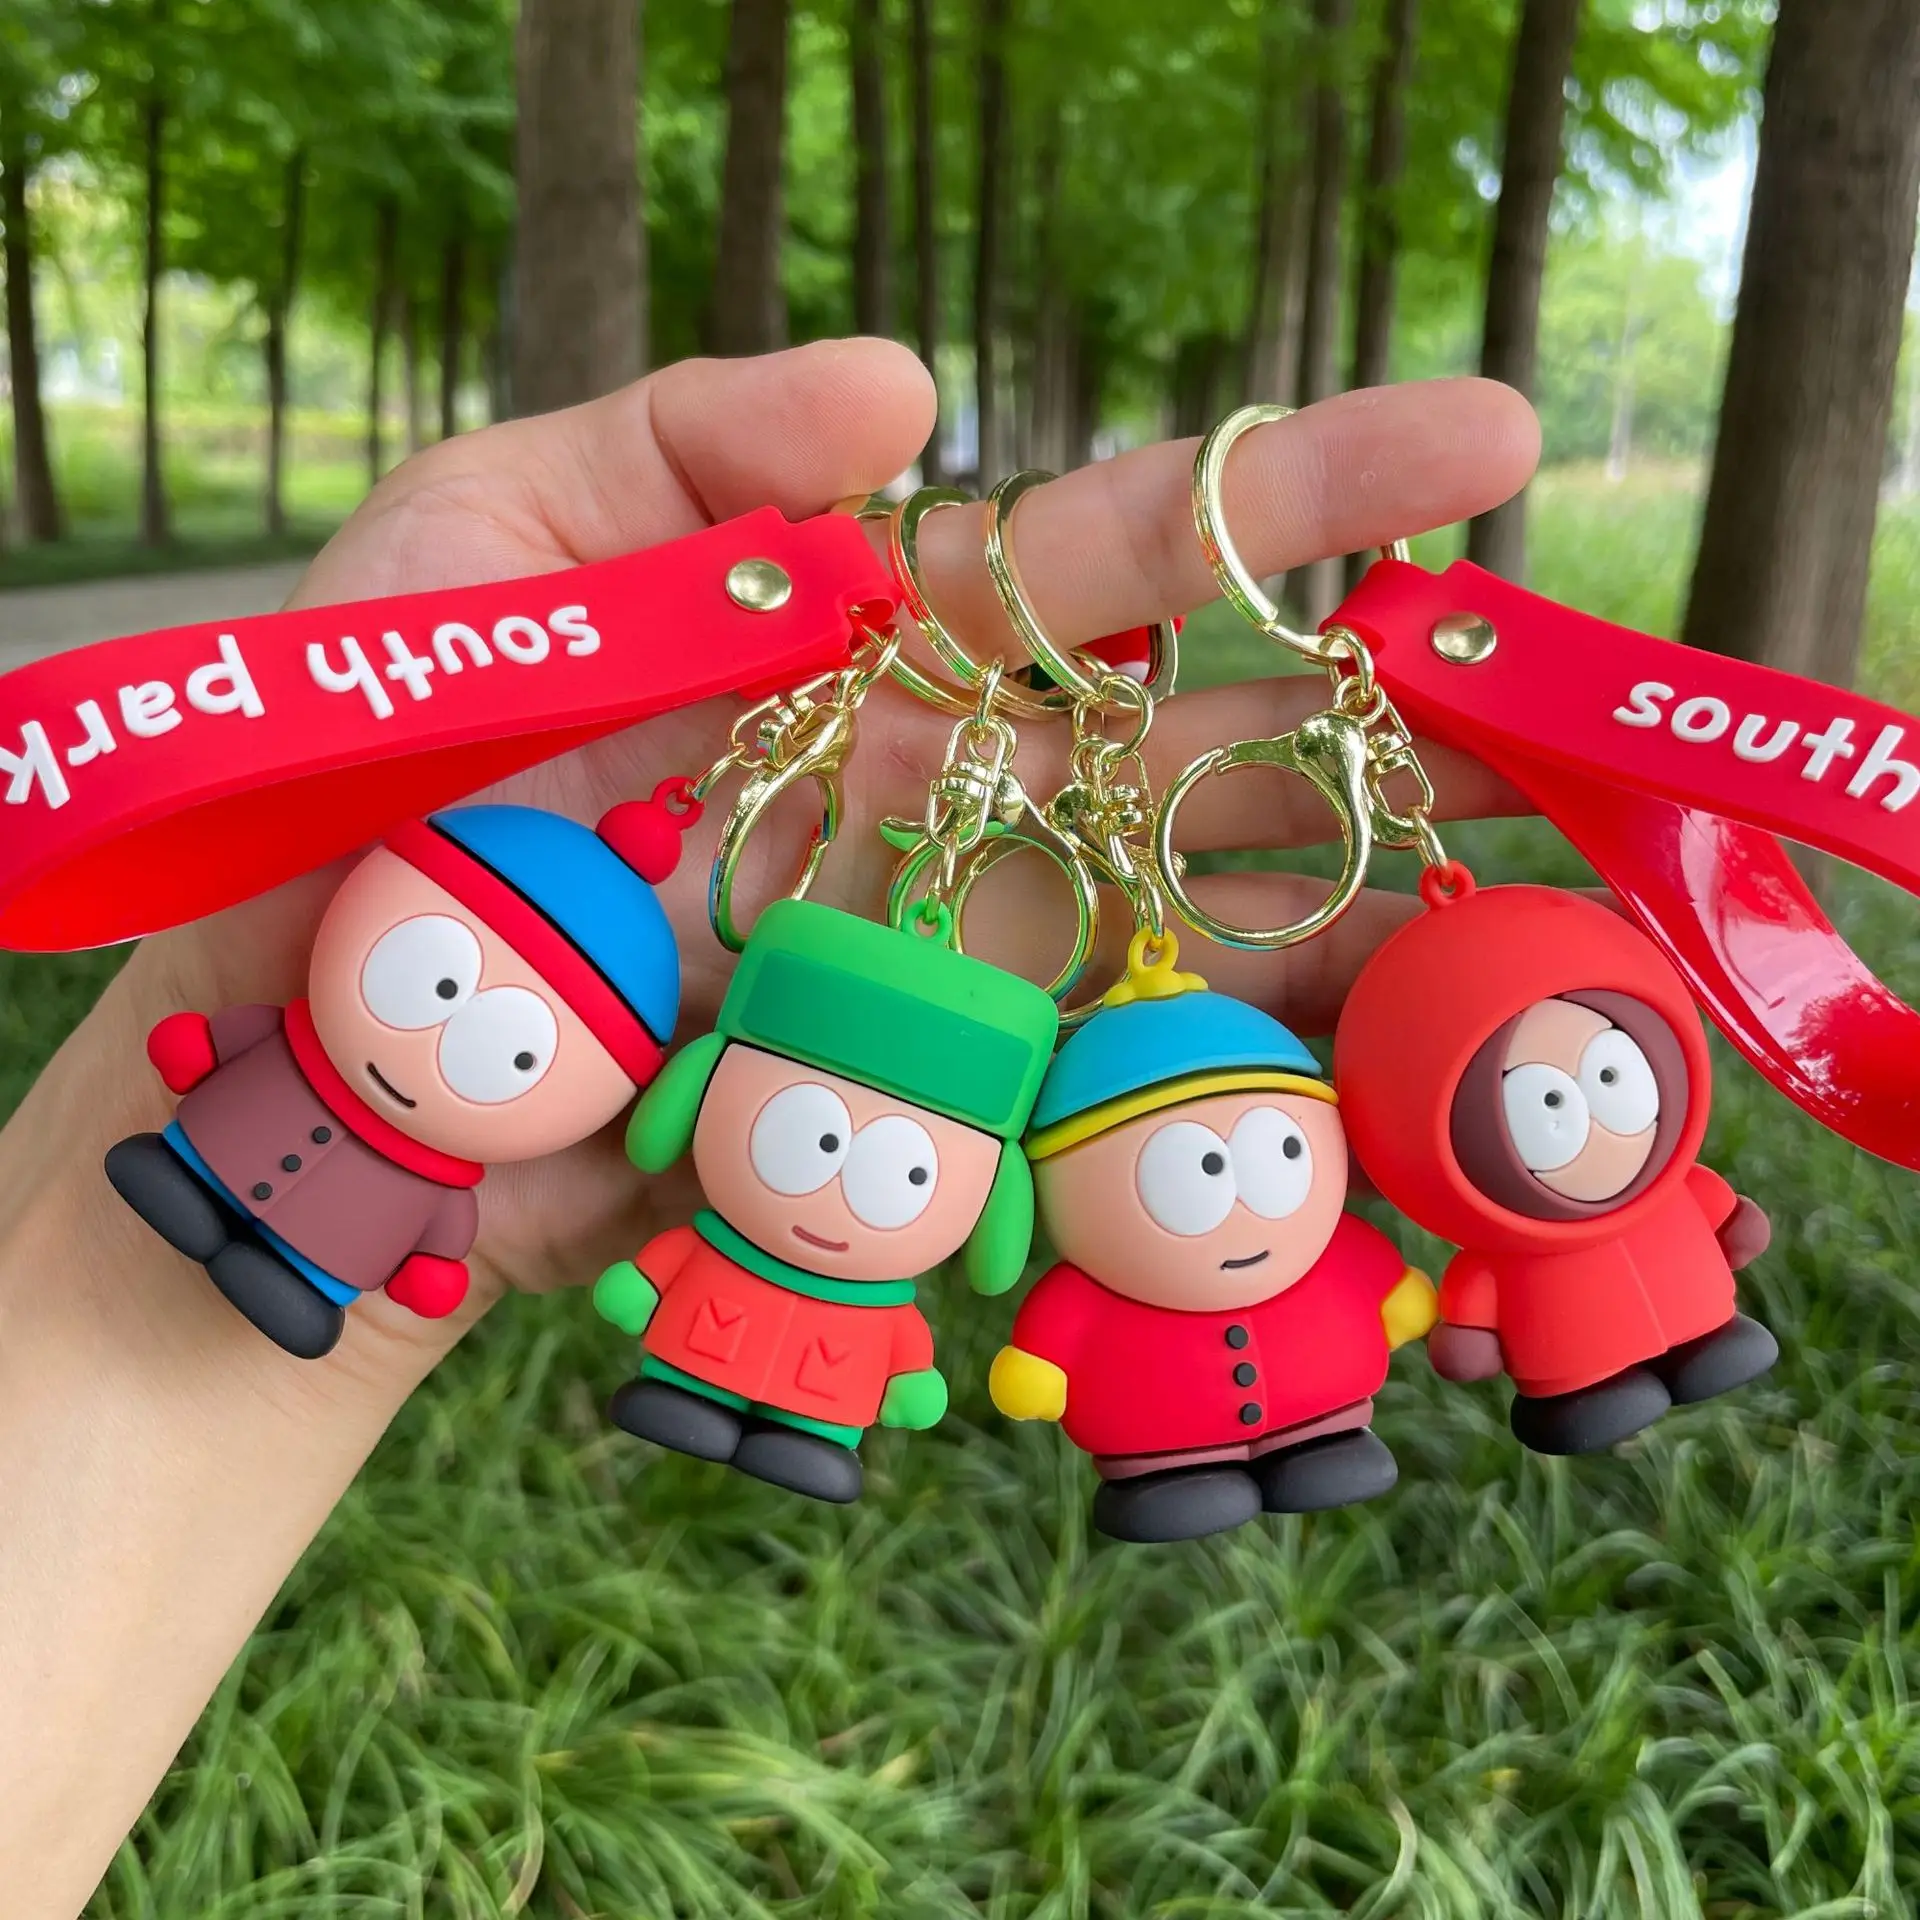 South Parkes Dolls Key Chains Anime Figure Key Ring Kawaii Bags Pendant Kids Toys Cute Car 1 - South Park Plush